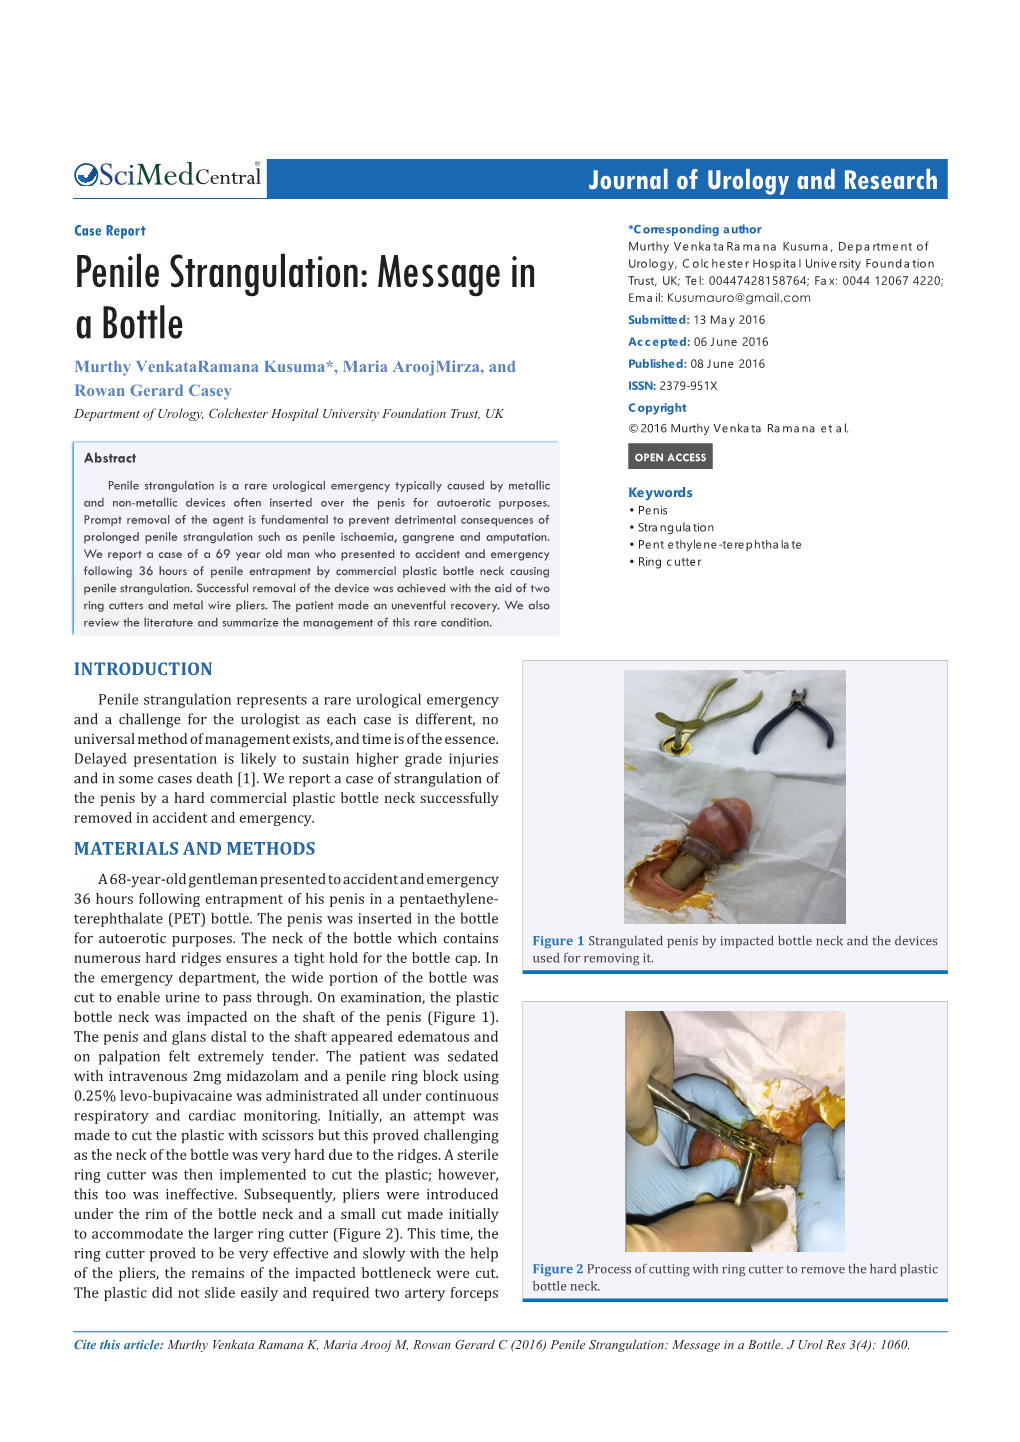 Penile Strangulation